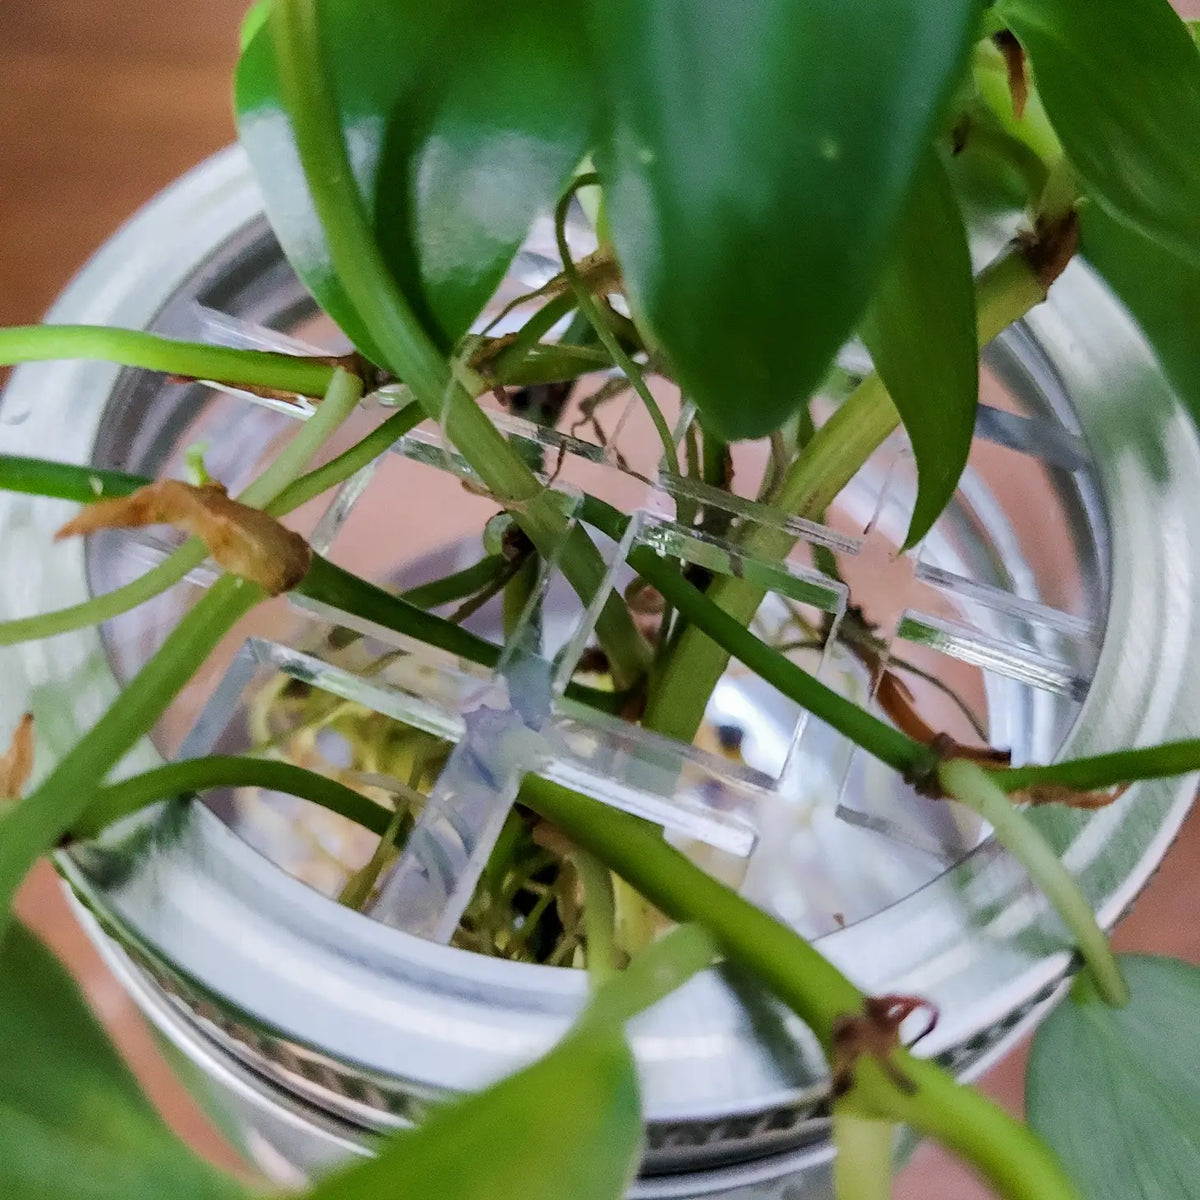 Leaf &amp; Node Mason Jar Lid Inserts - Plant Propagation and Flower Vase | Combo Packs with 1 Grid &amp; 1 Bullseye Lid